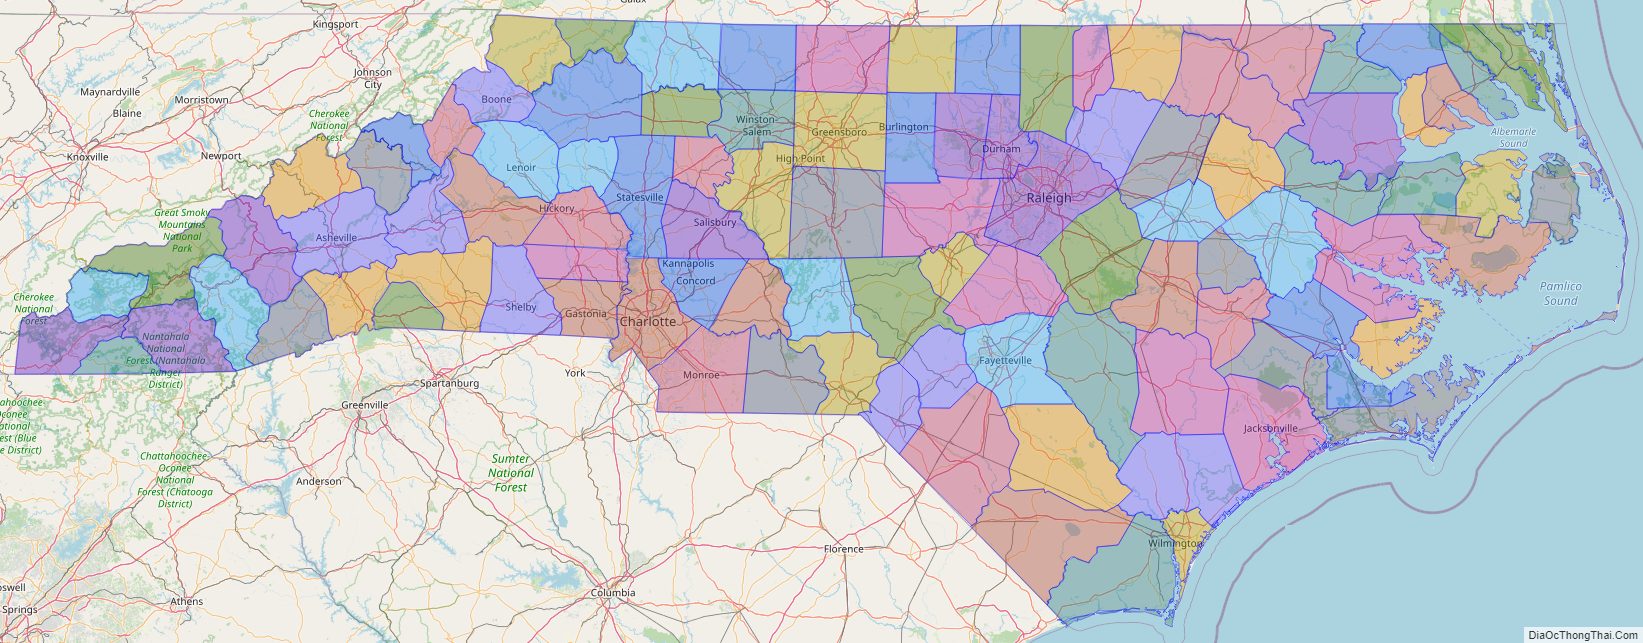 Printable - Large Scale Political Map of North Carolina